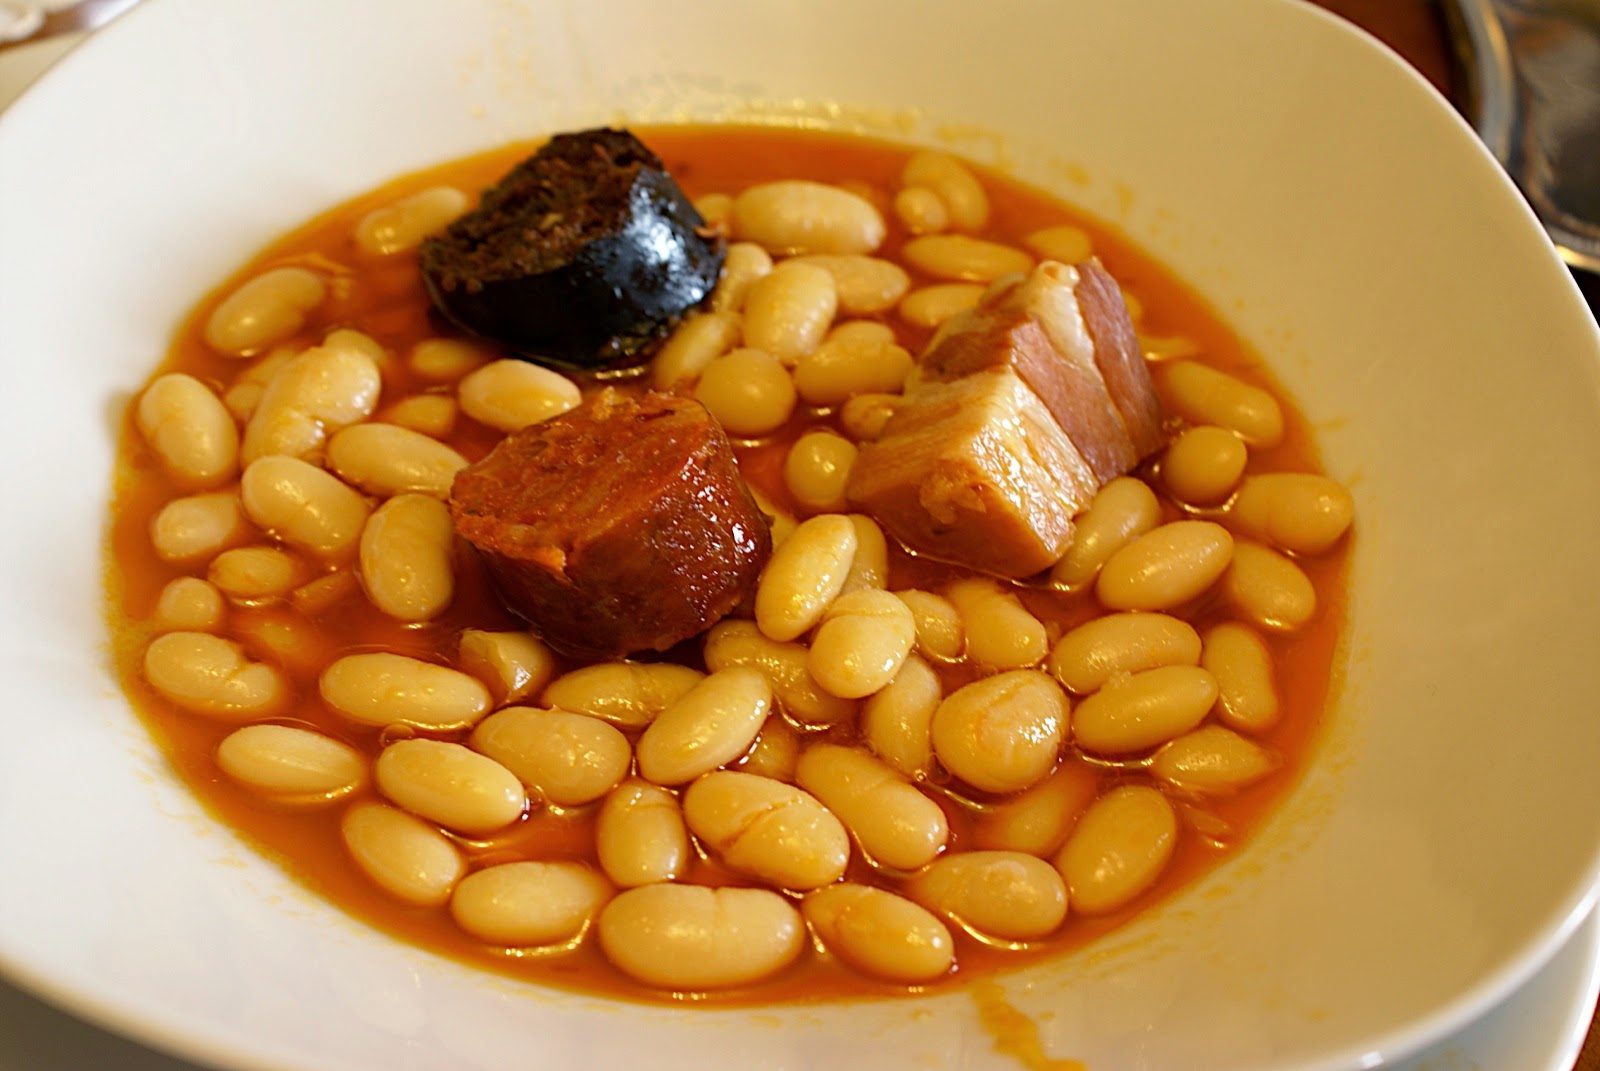 La fabada asturiana, gastronomía típica de Oviedo